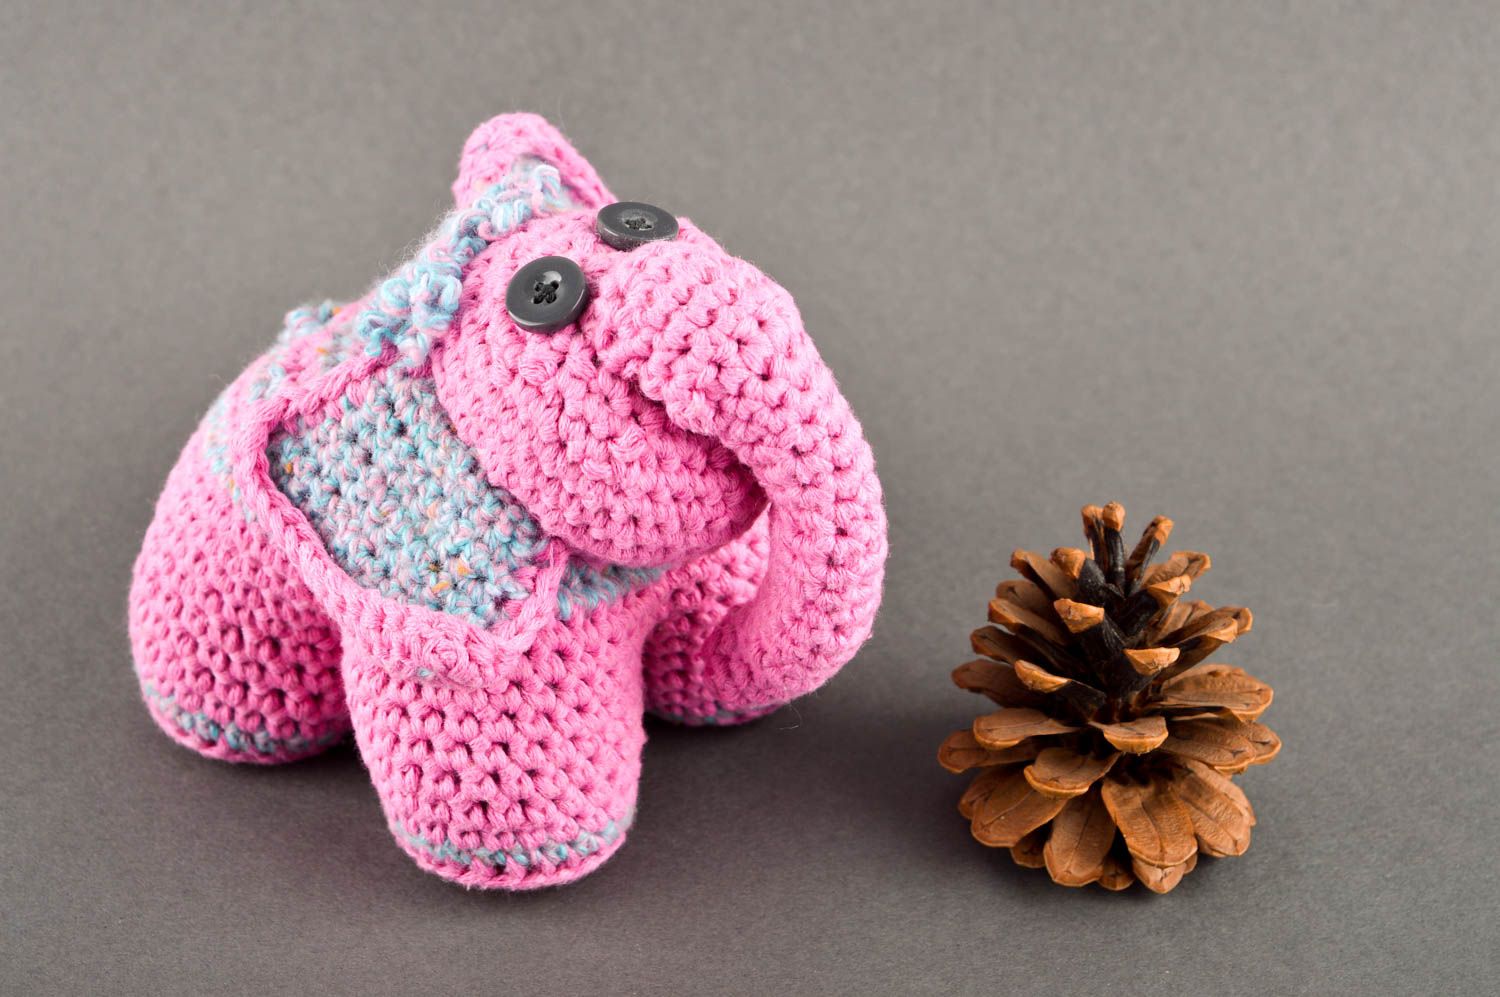 Handmade toy stuffed toy crocheted toy for babies soft nursery decor photo 1